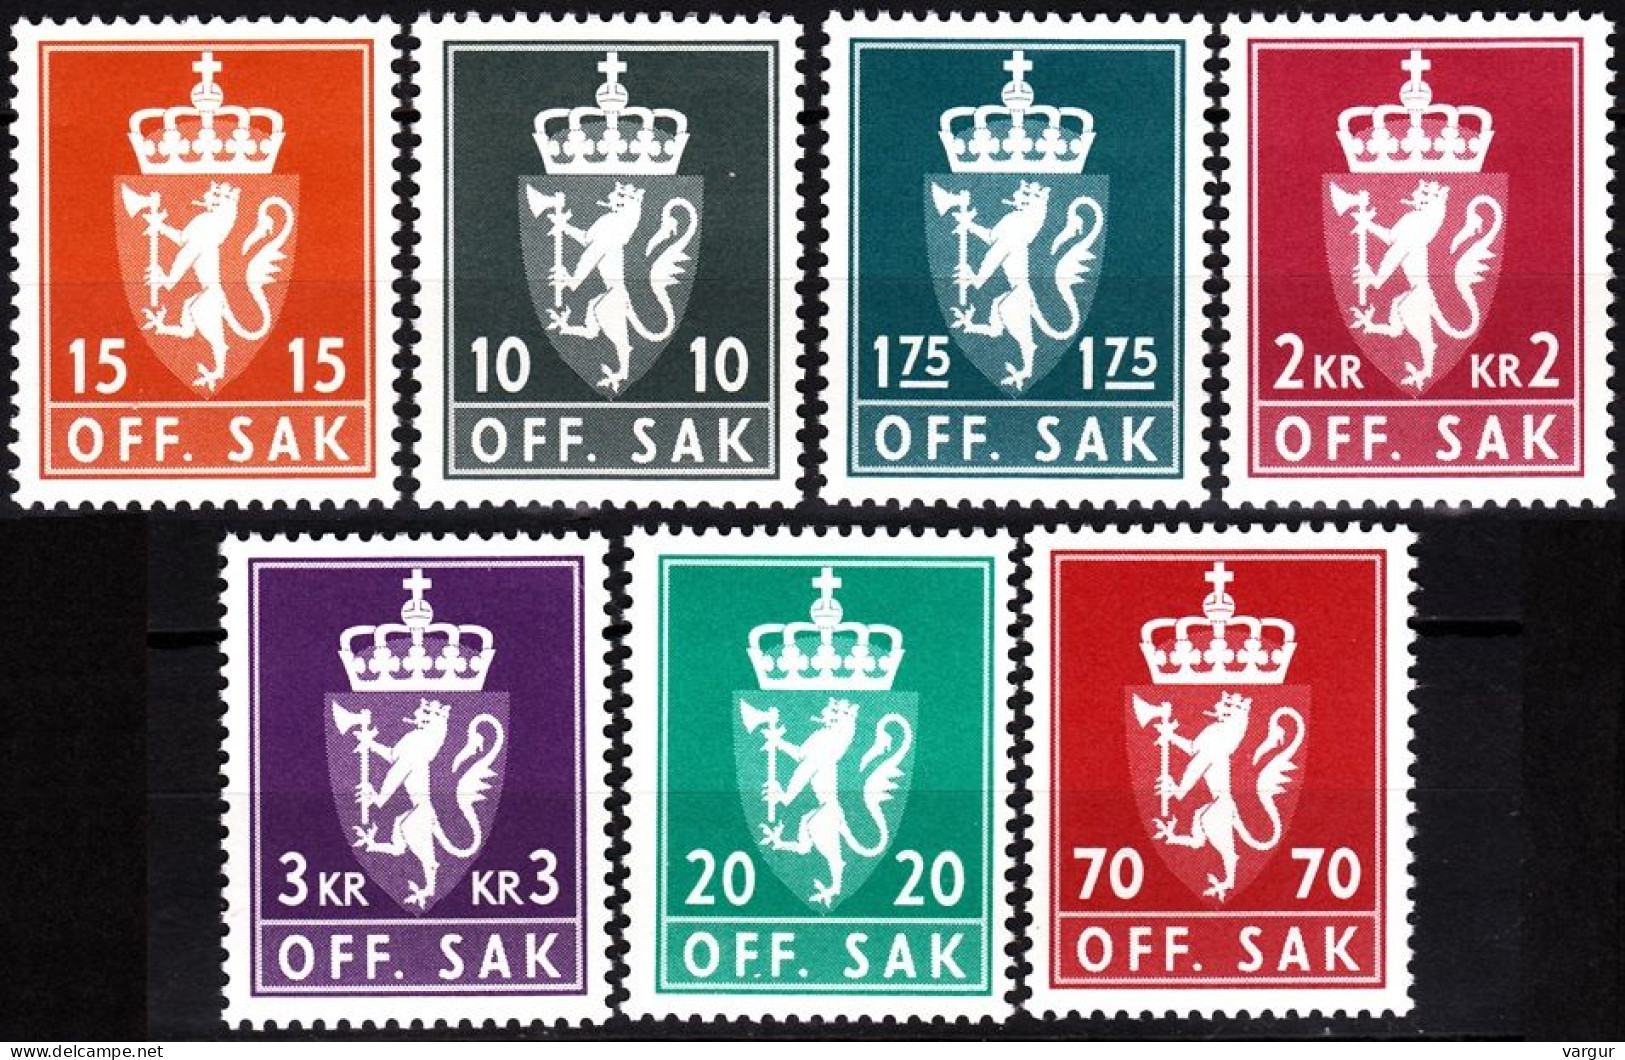 NORWAY 1981-82 Official. Heraldry. 7v, MNH - Servizio